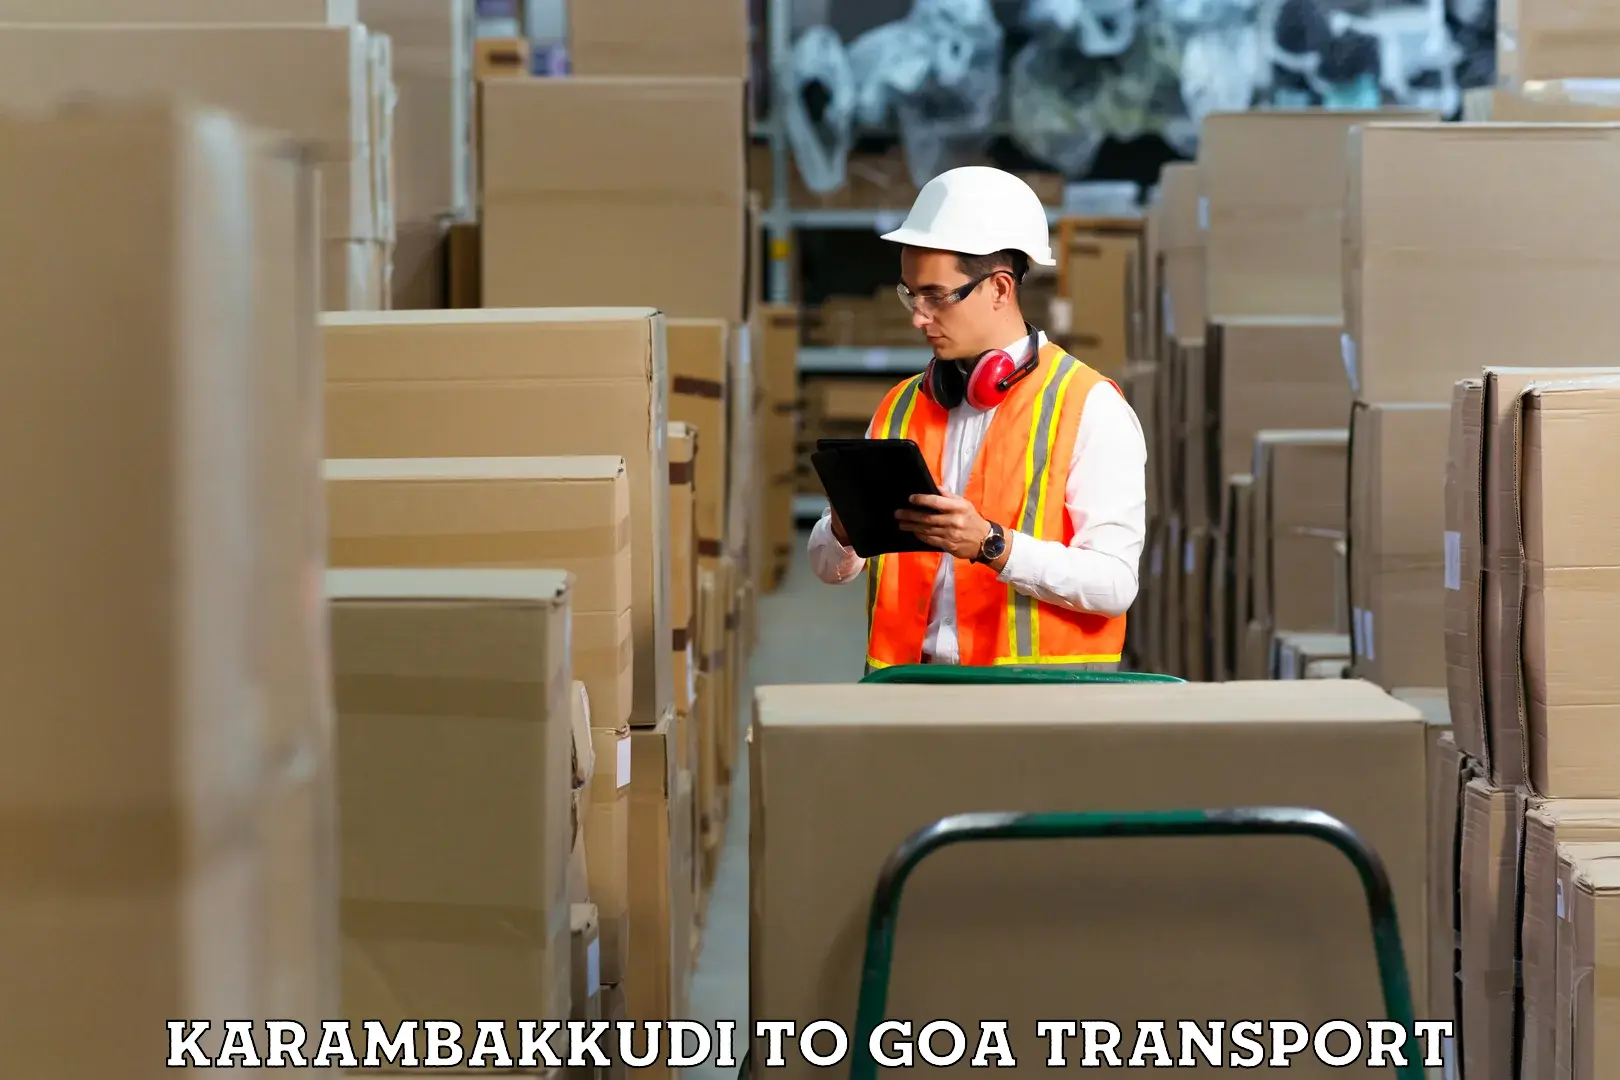 Transport shared services Karambakkudi to Goa University